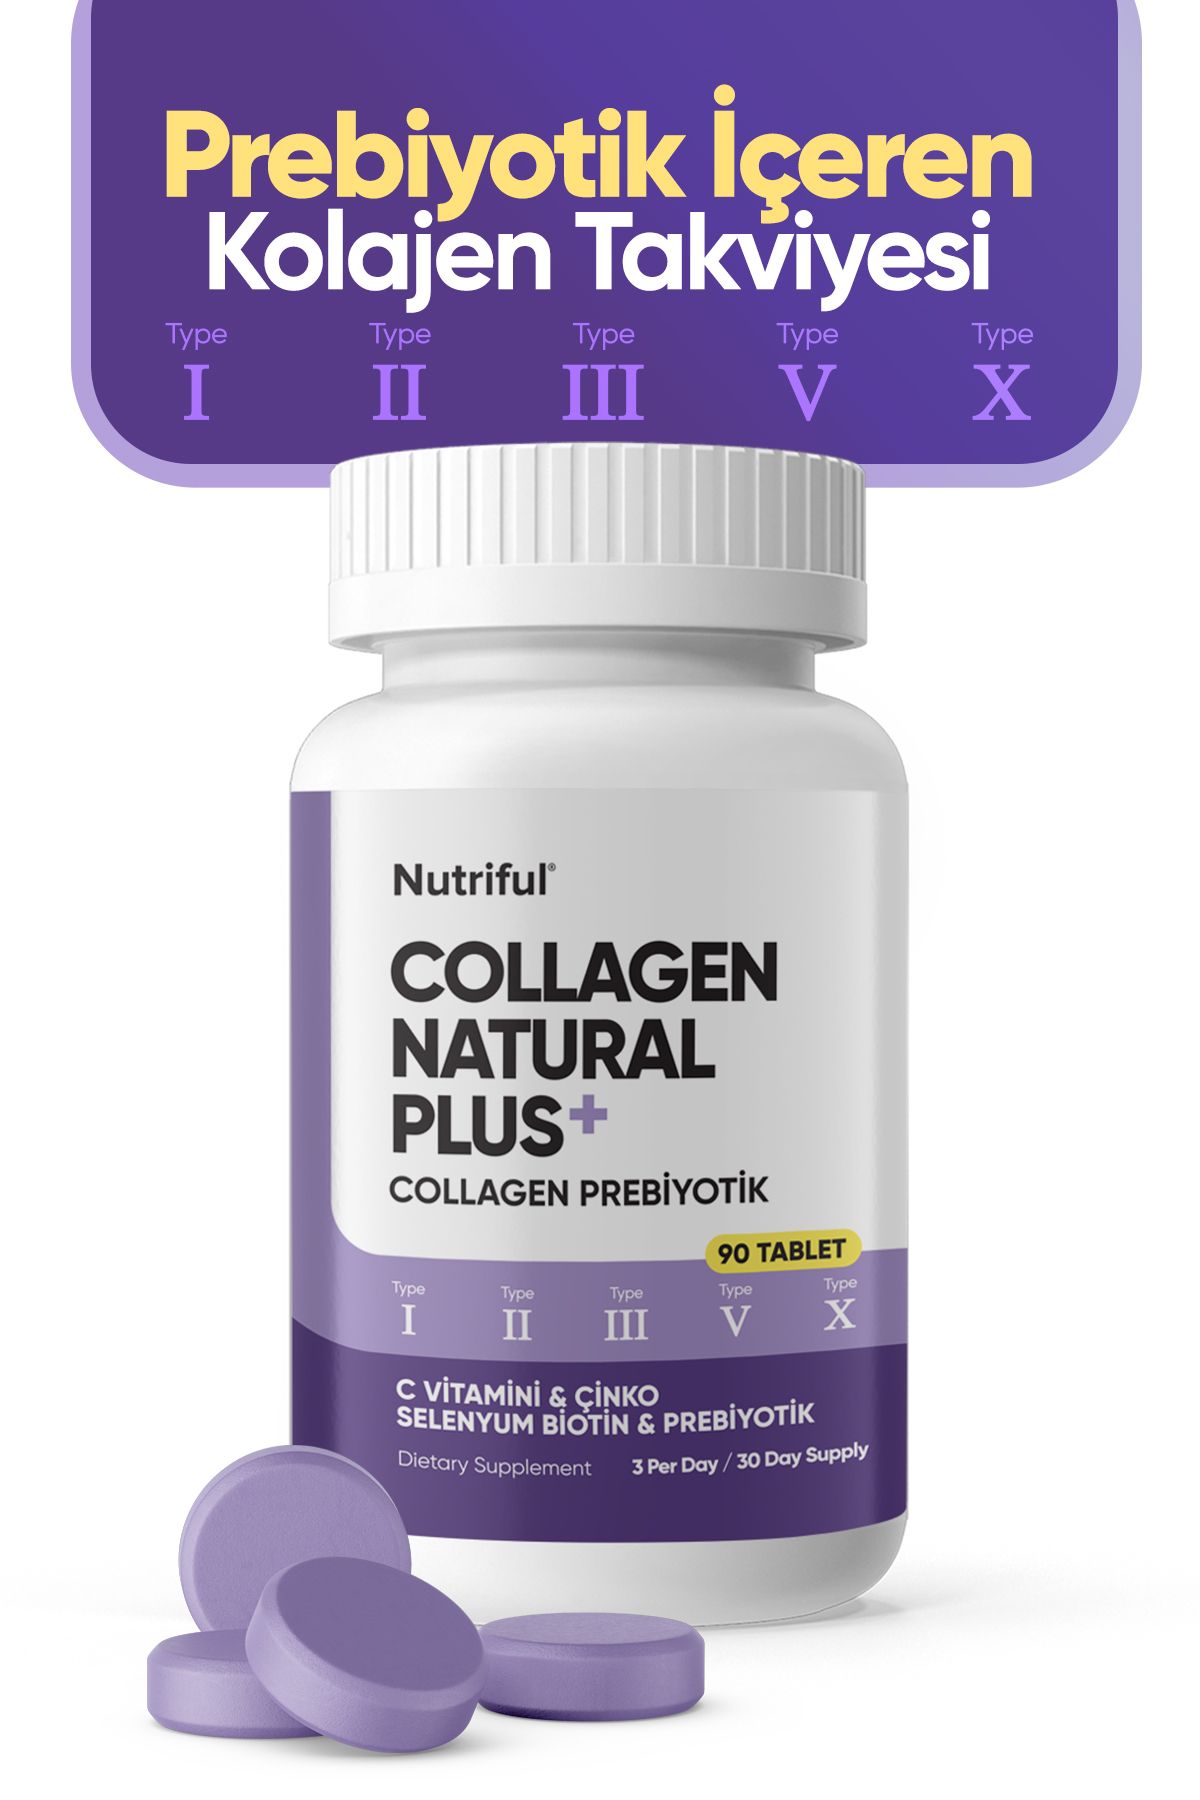 Nutriful Collagen Natural Plus 5 TİP Collagen+Prebiyotik TİP 1-2-3-5-10 (C vitamini, Selenyum, ) 90 TABLET.